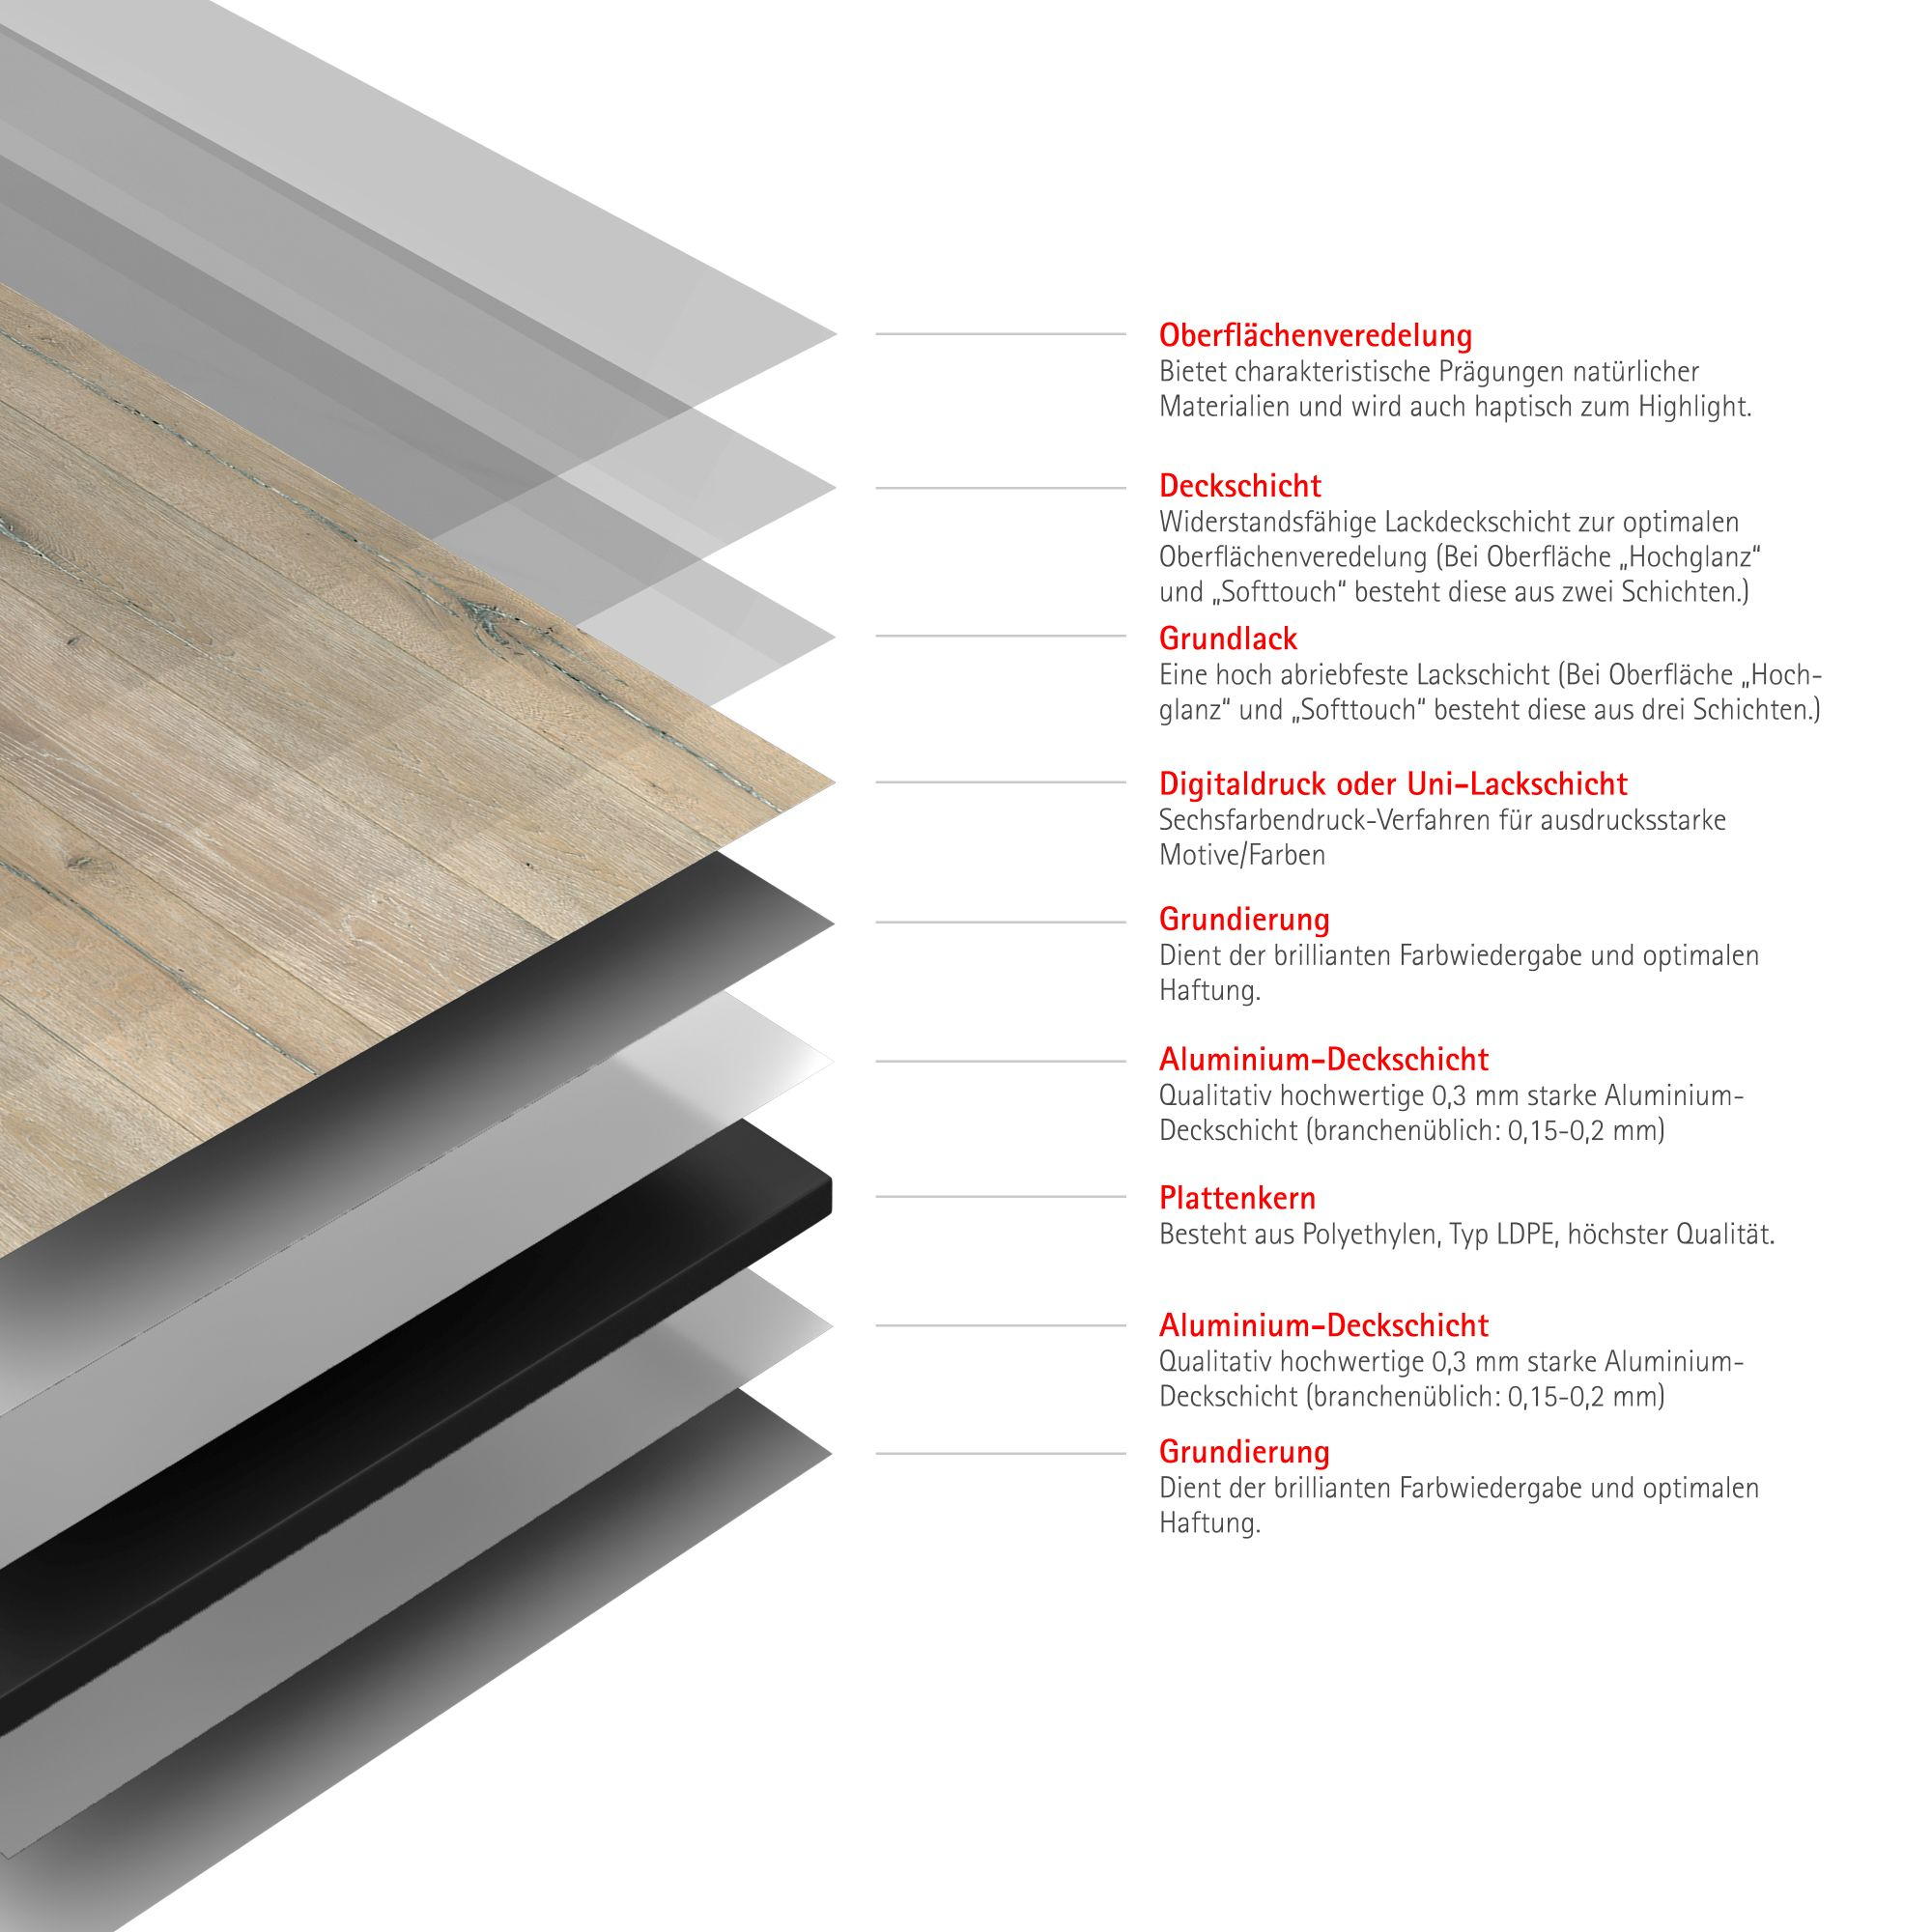 Duschrückwand 'DecoDesign' Dekor Holz Landhaus 150 x 255 cm + product picture